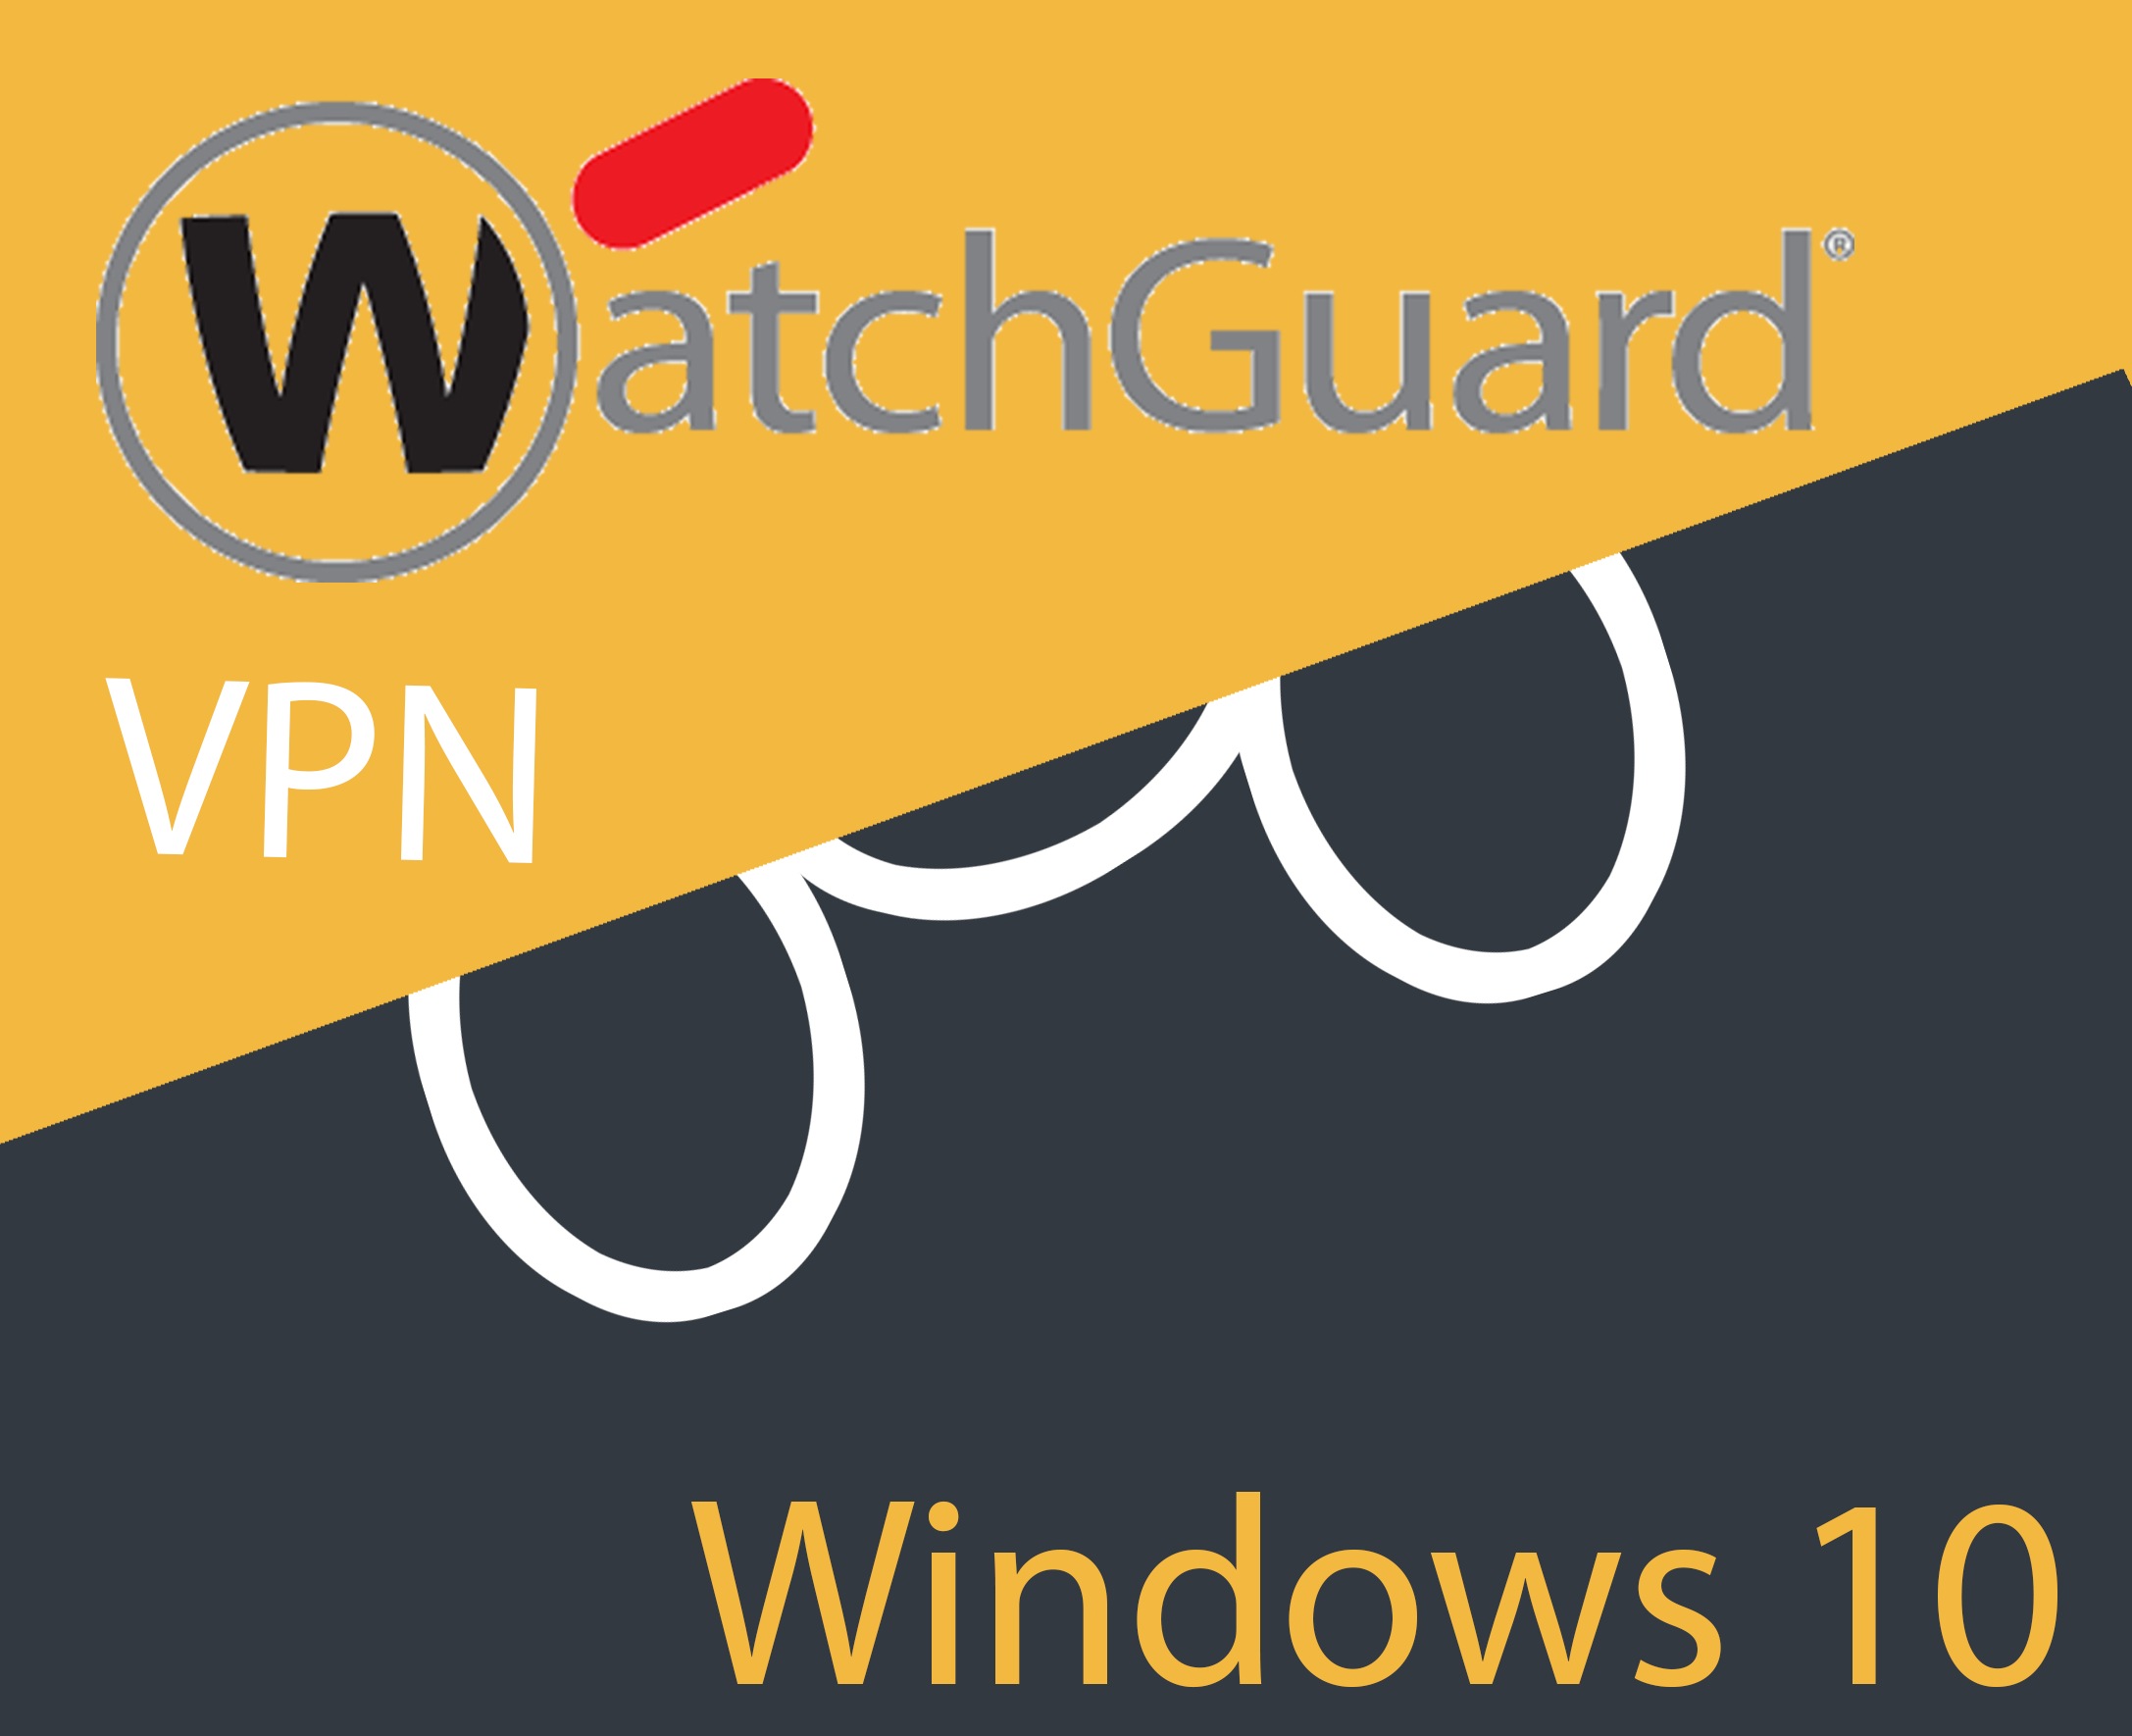 watchguard vpn disconnects immediately following